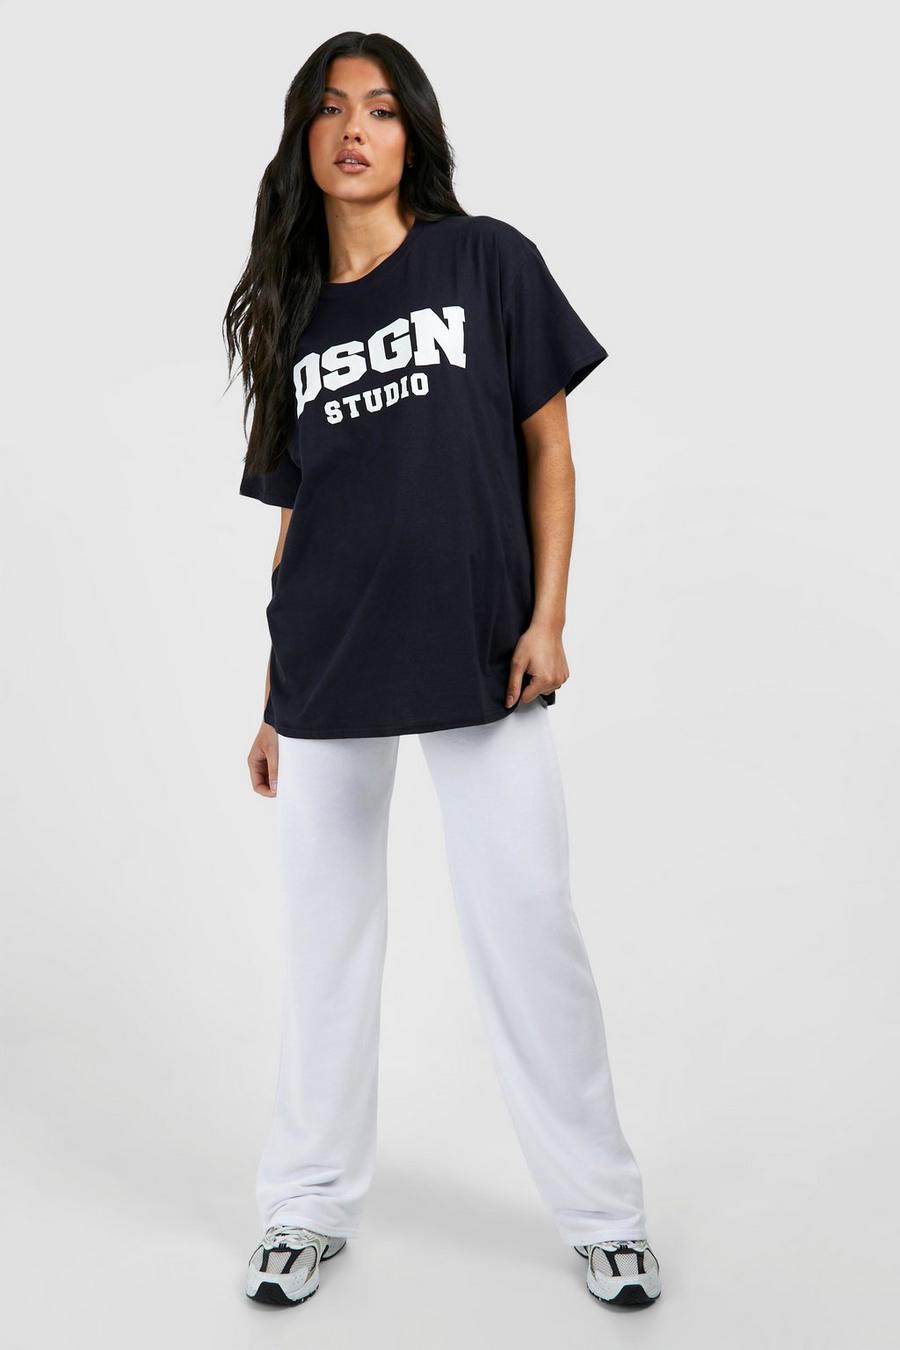 Chándal Premamá con camiseta Dsgn Studio, Navy